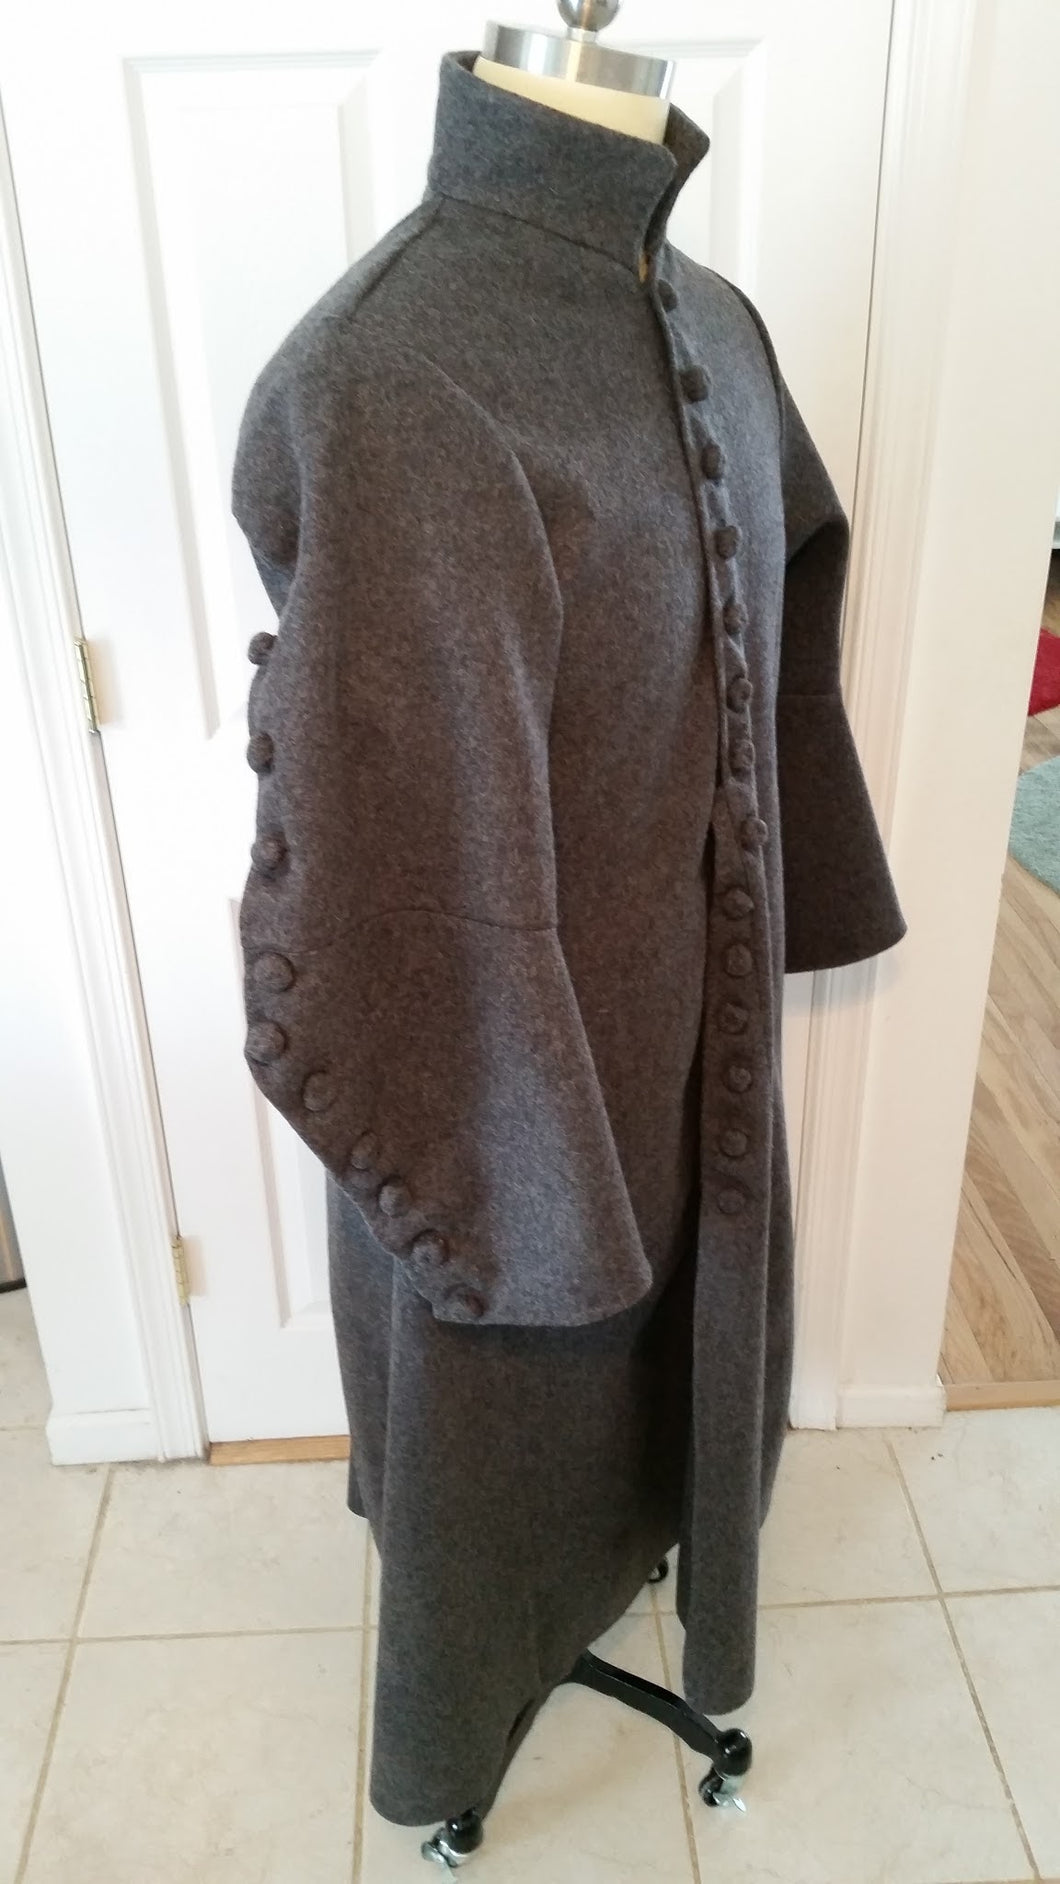 RH311 — Irish Killery Coat and Trews sewing pattern